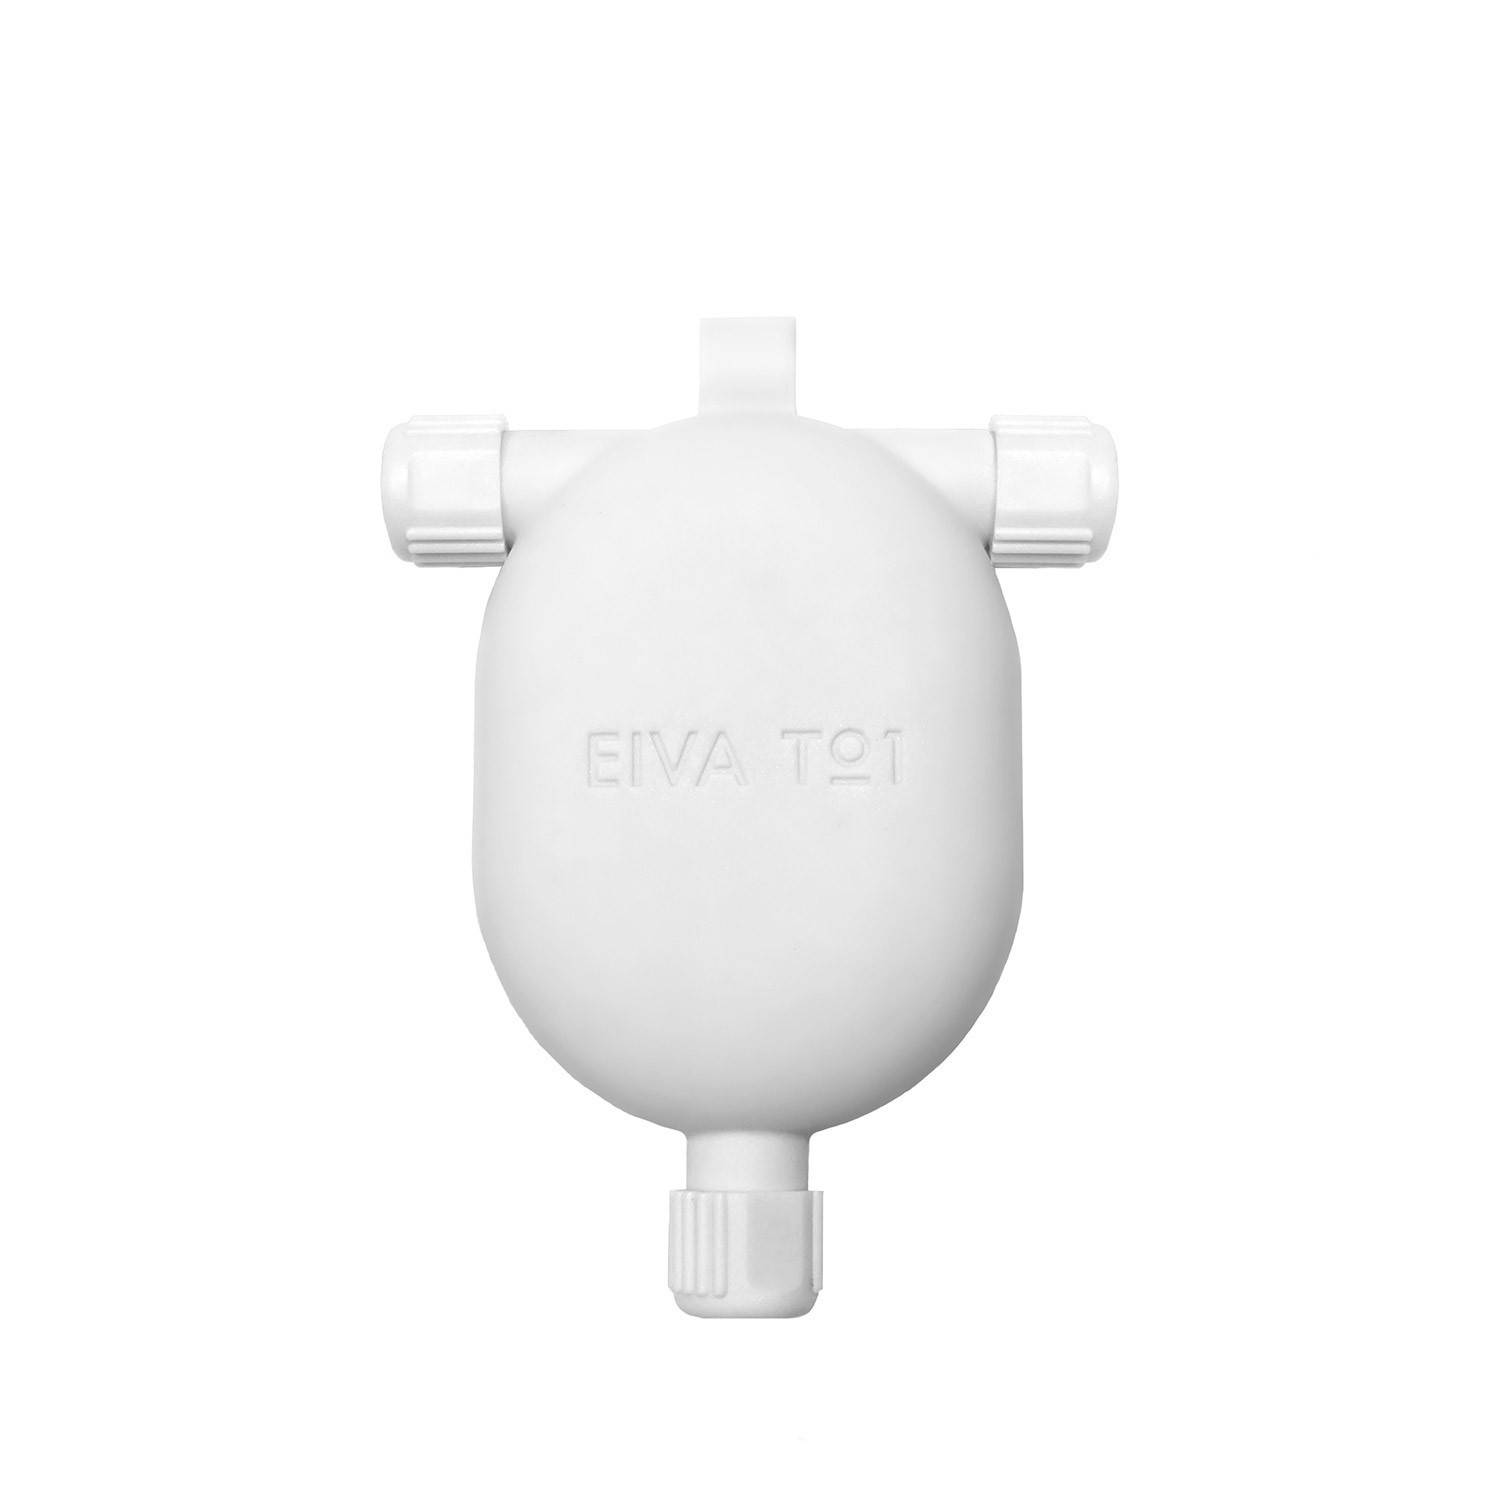 EIVA-3, 3-way outdoor IP65 snap-in joint